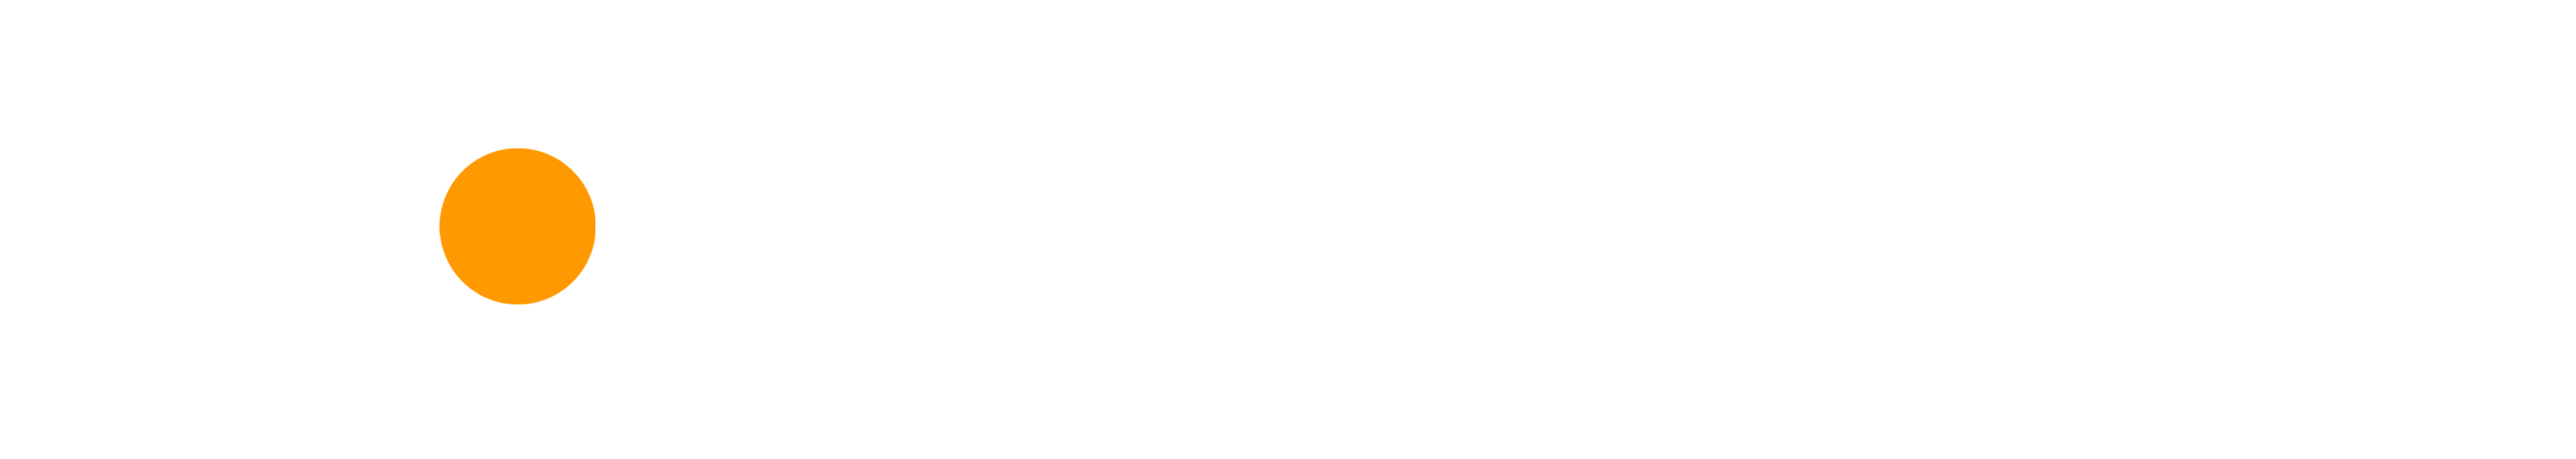 Perceptual User Interfaces Logo